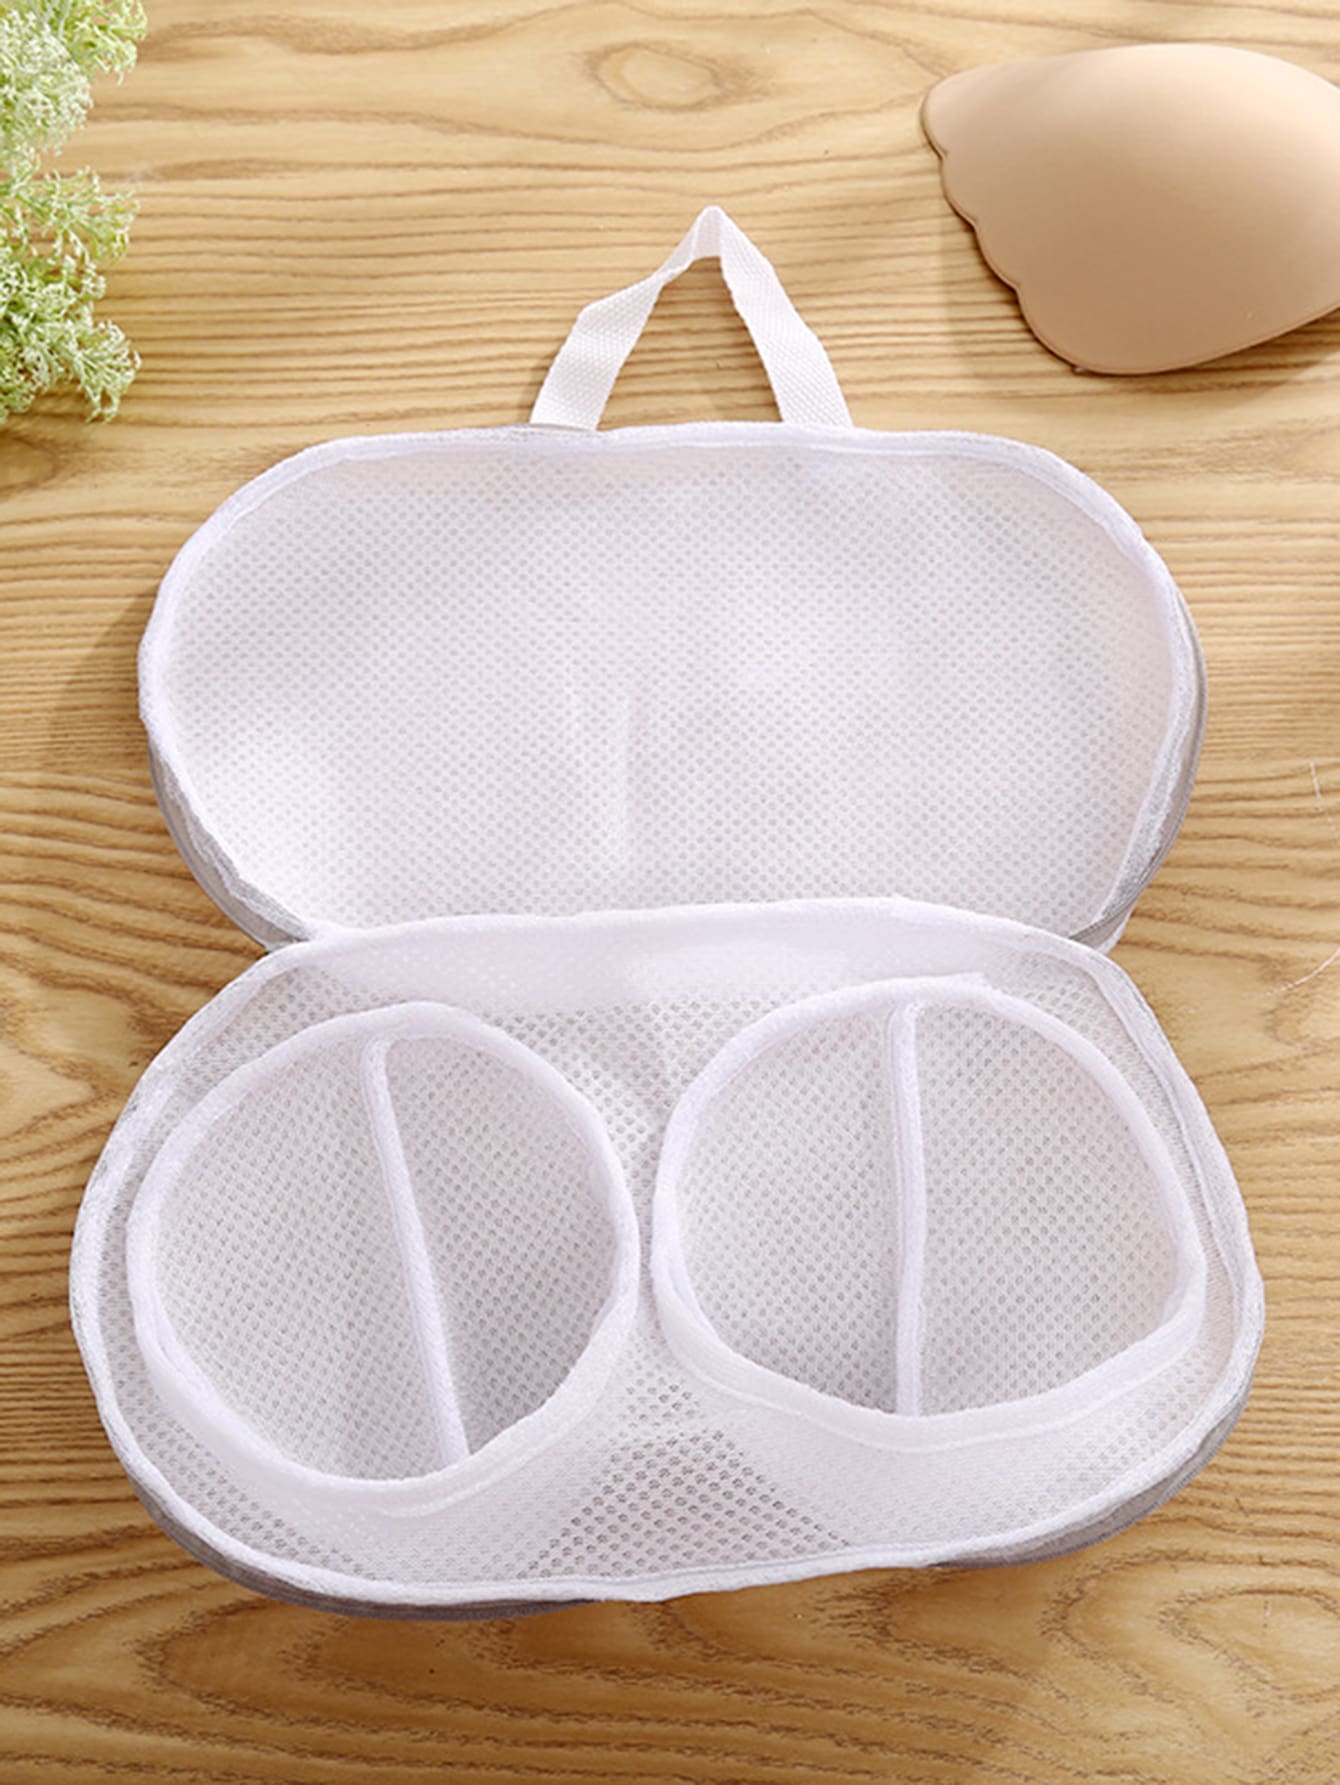 Bra Underwear Durable Nylon With Zipper Washing Protective Laundry Bag